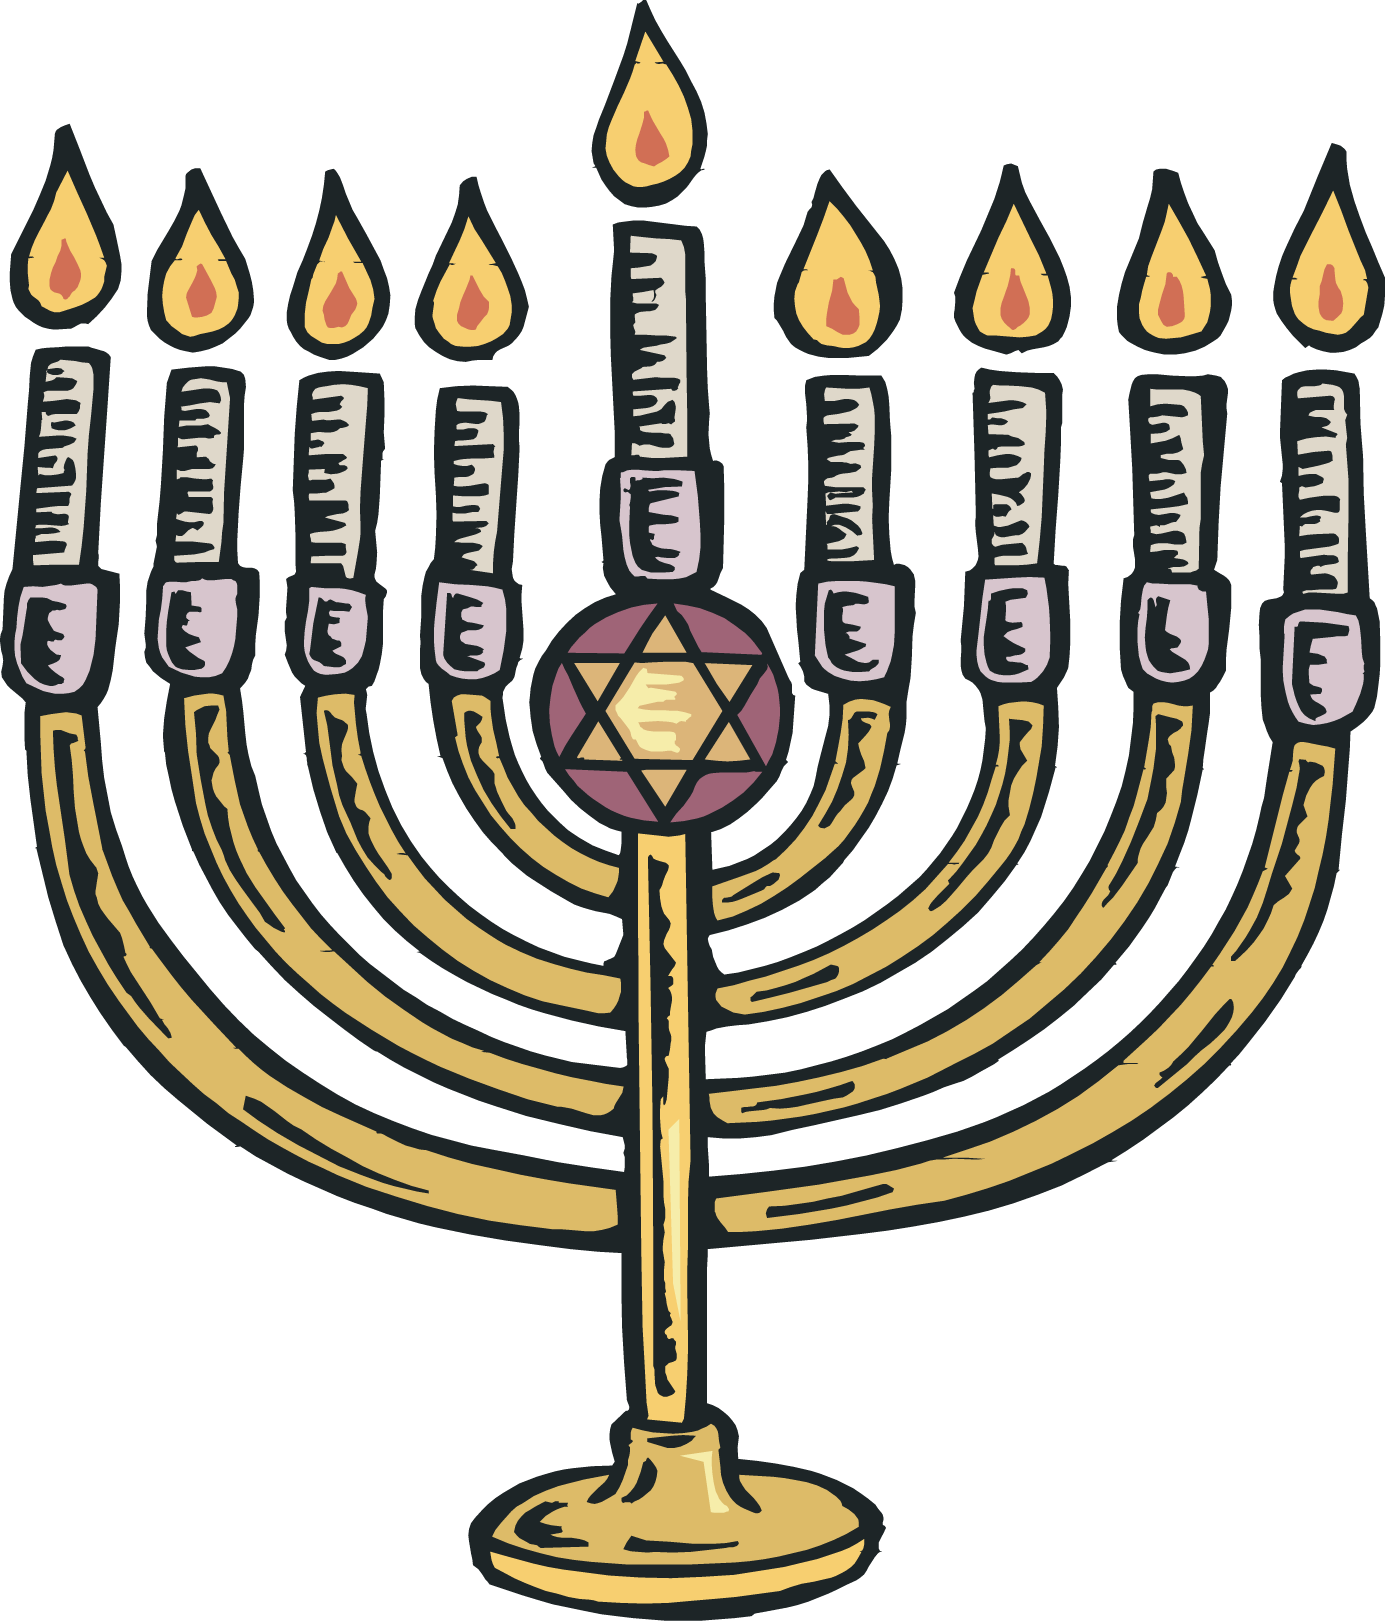 Free Images Of Hanukkah, Download Free Images Of Hanukkah png images